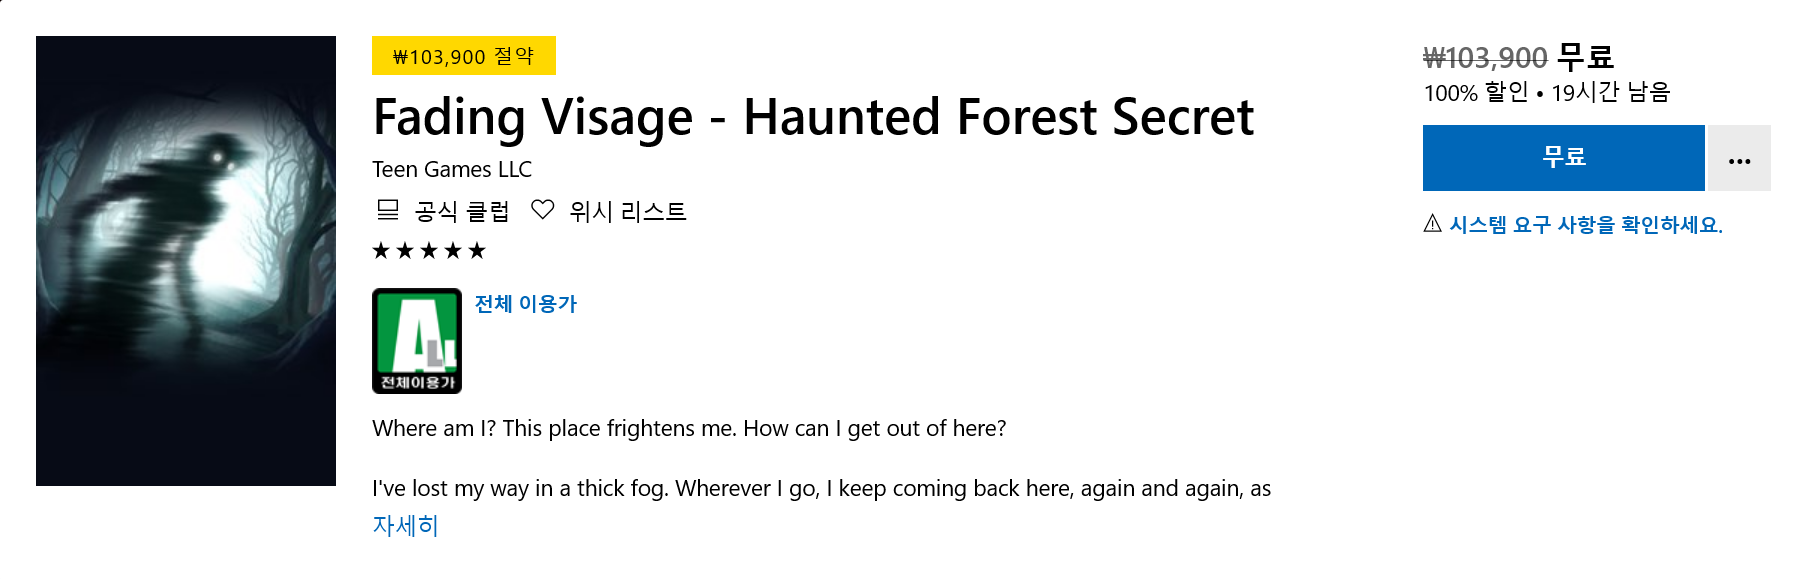 Screenshot_2020-04-01 Fading Visage - Haunted Forest Secret 구매 - Microsoft Store ko-KR.png